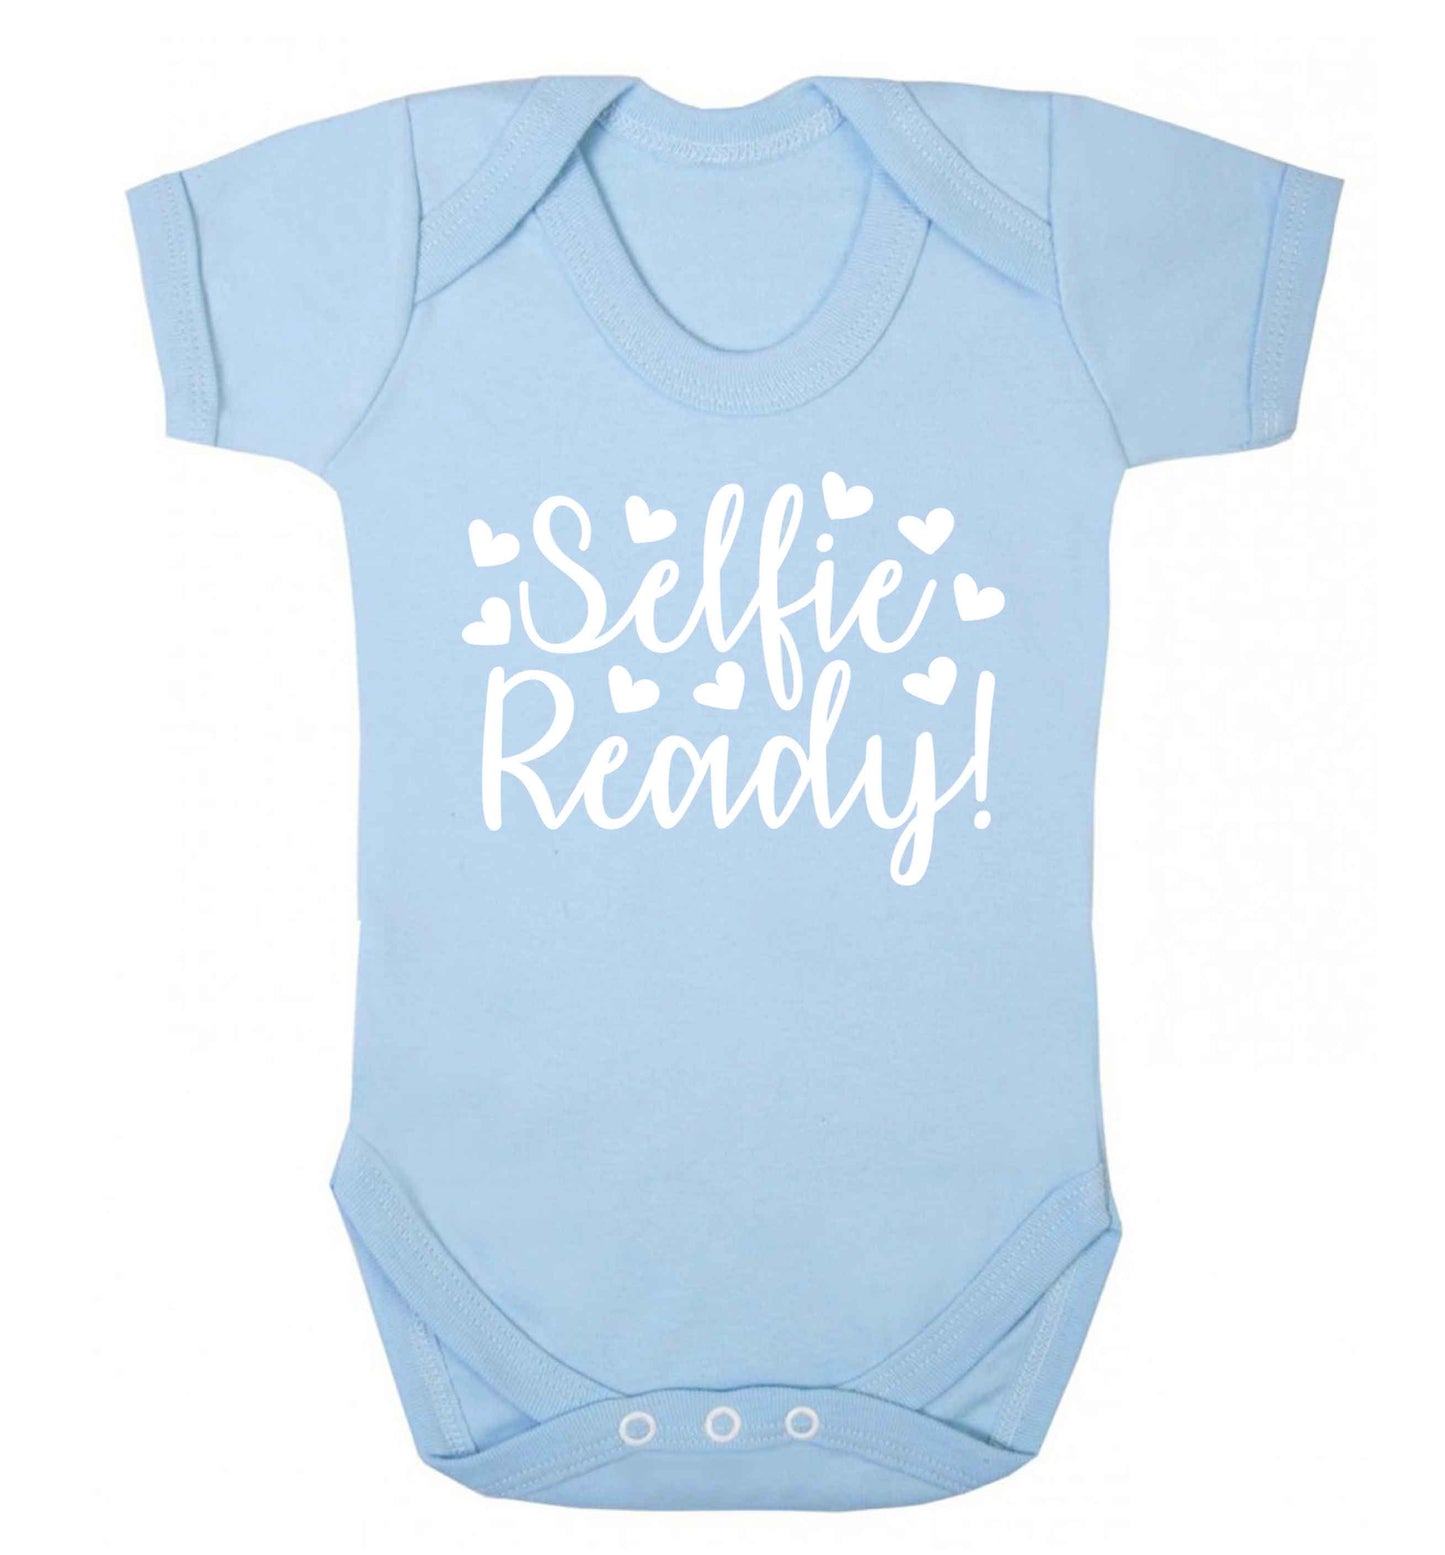 Selfie ready Baby Vest pale blue 18-24 months